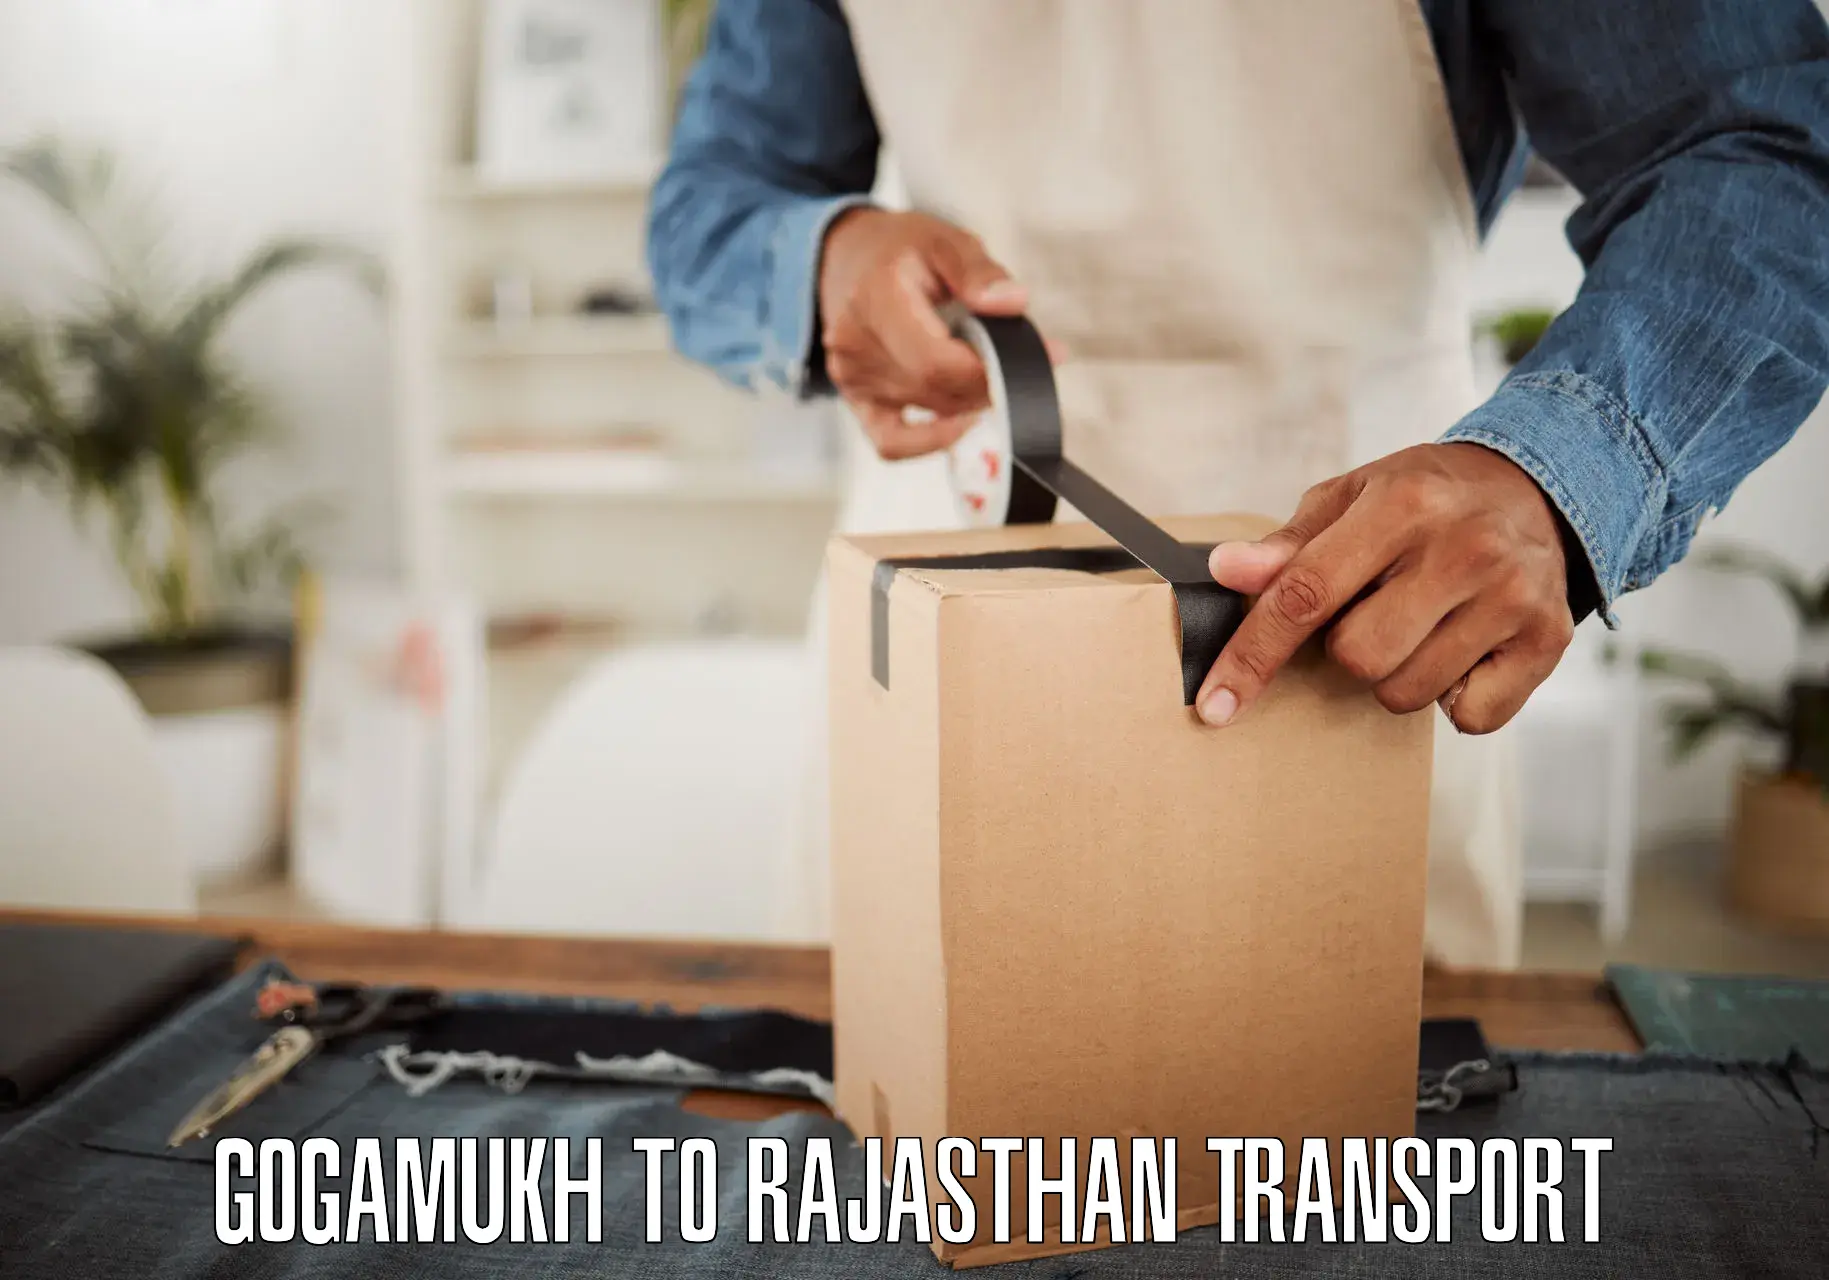 Transport in sharing Gogamukh to Sultana